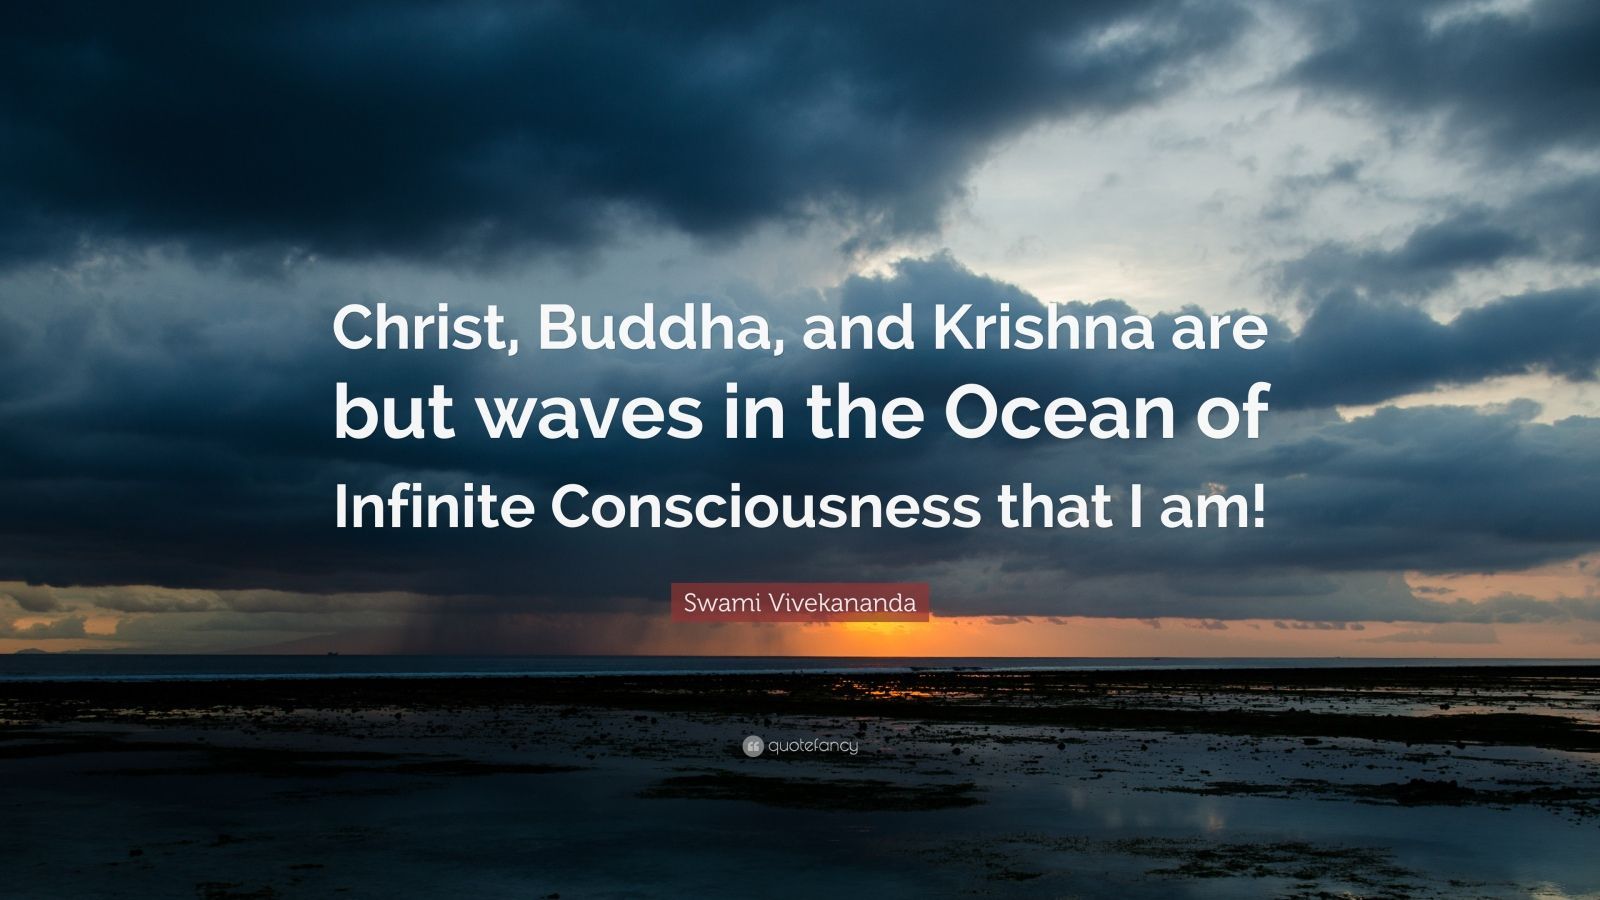 Swami Vivekananda Quote: “Christ, Buddha, and Krishna are but